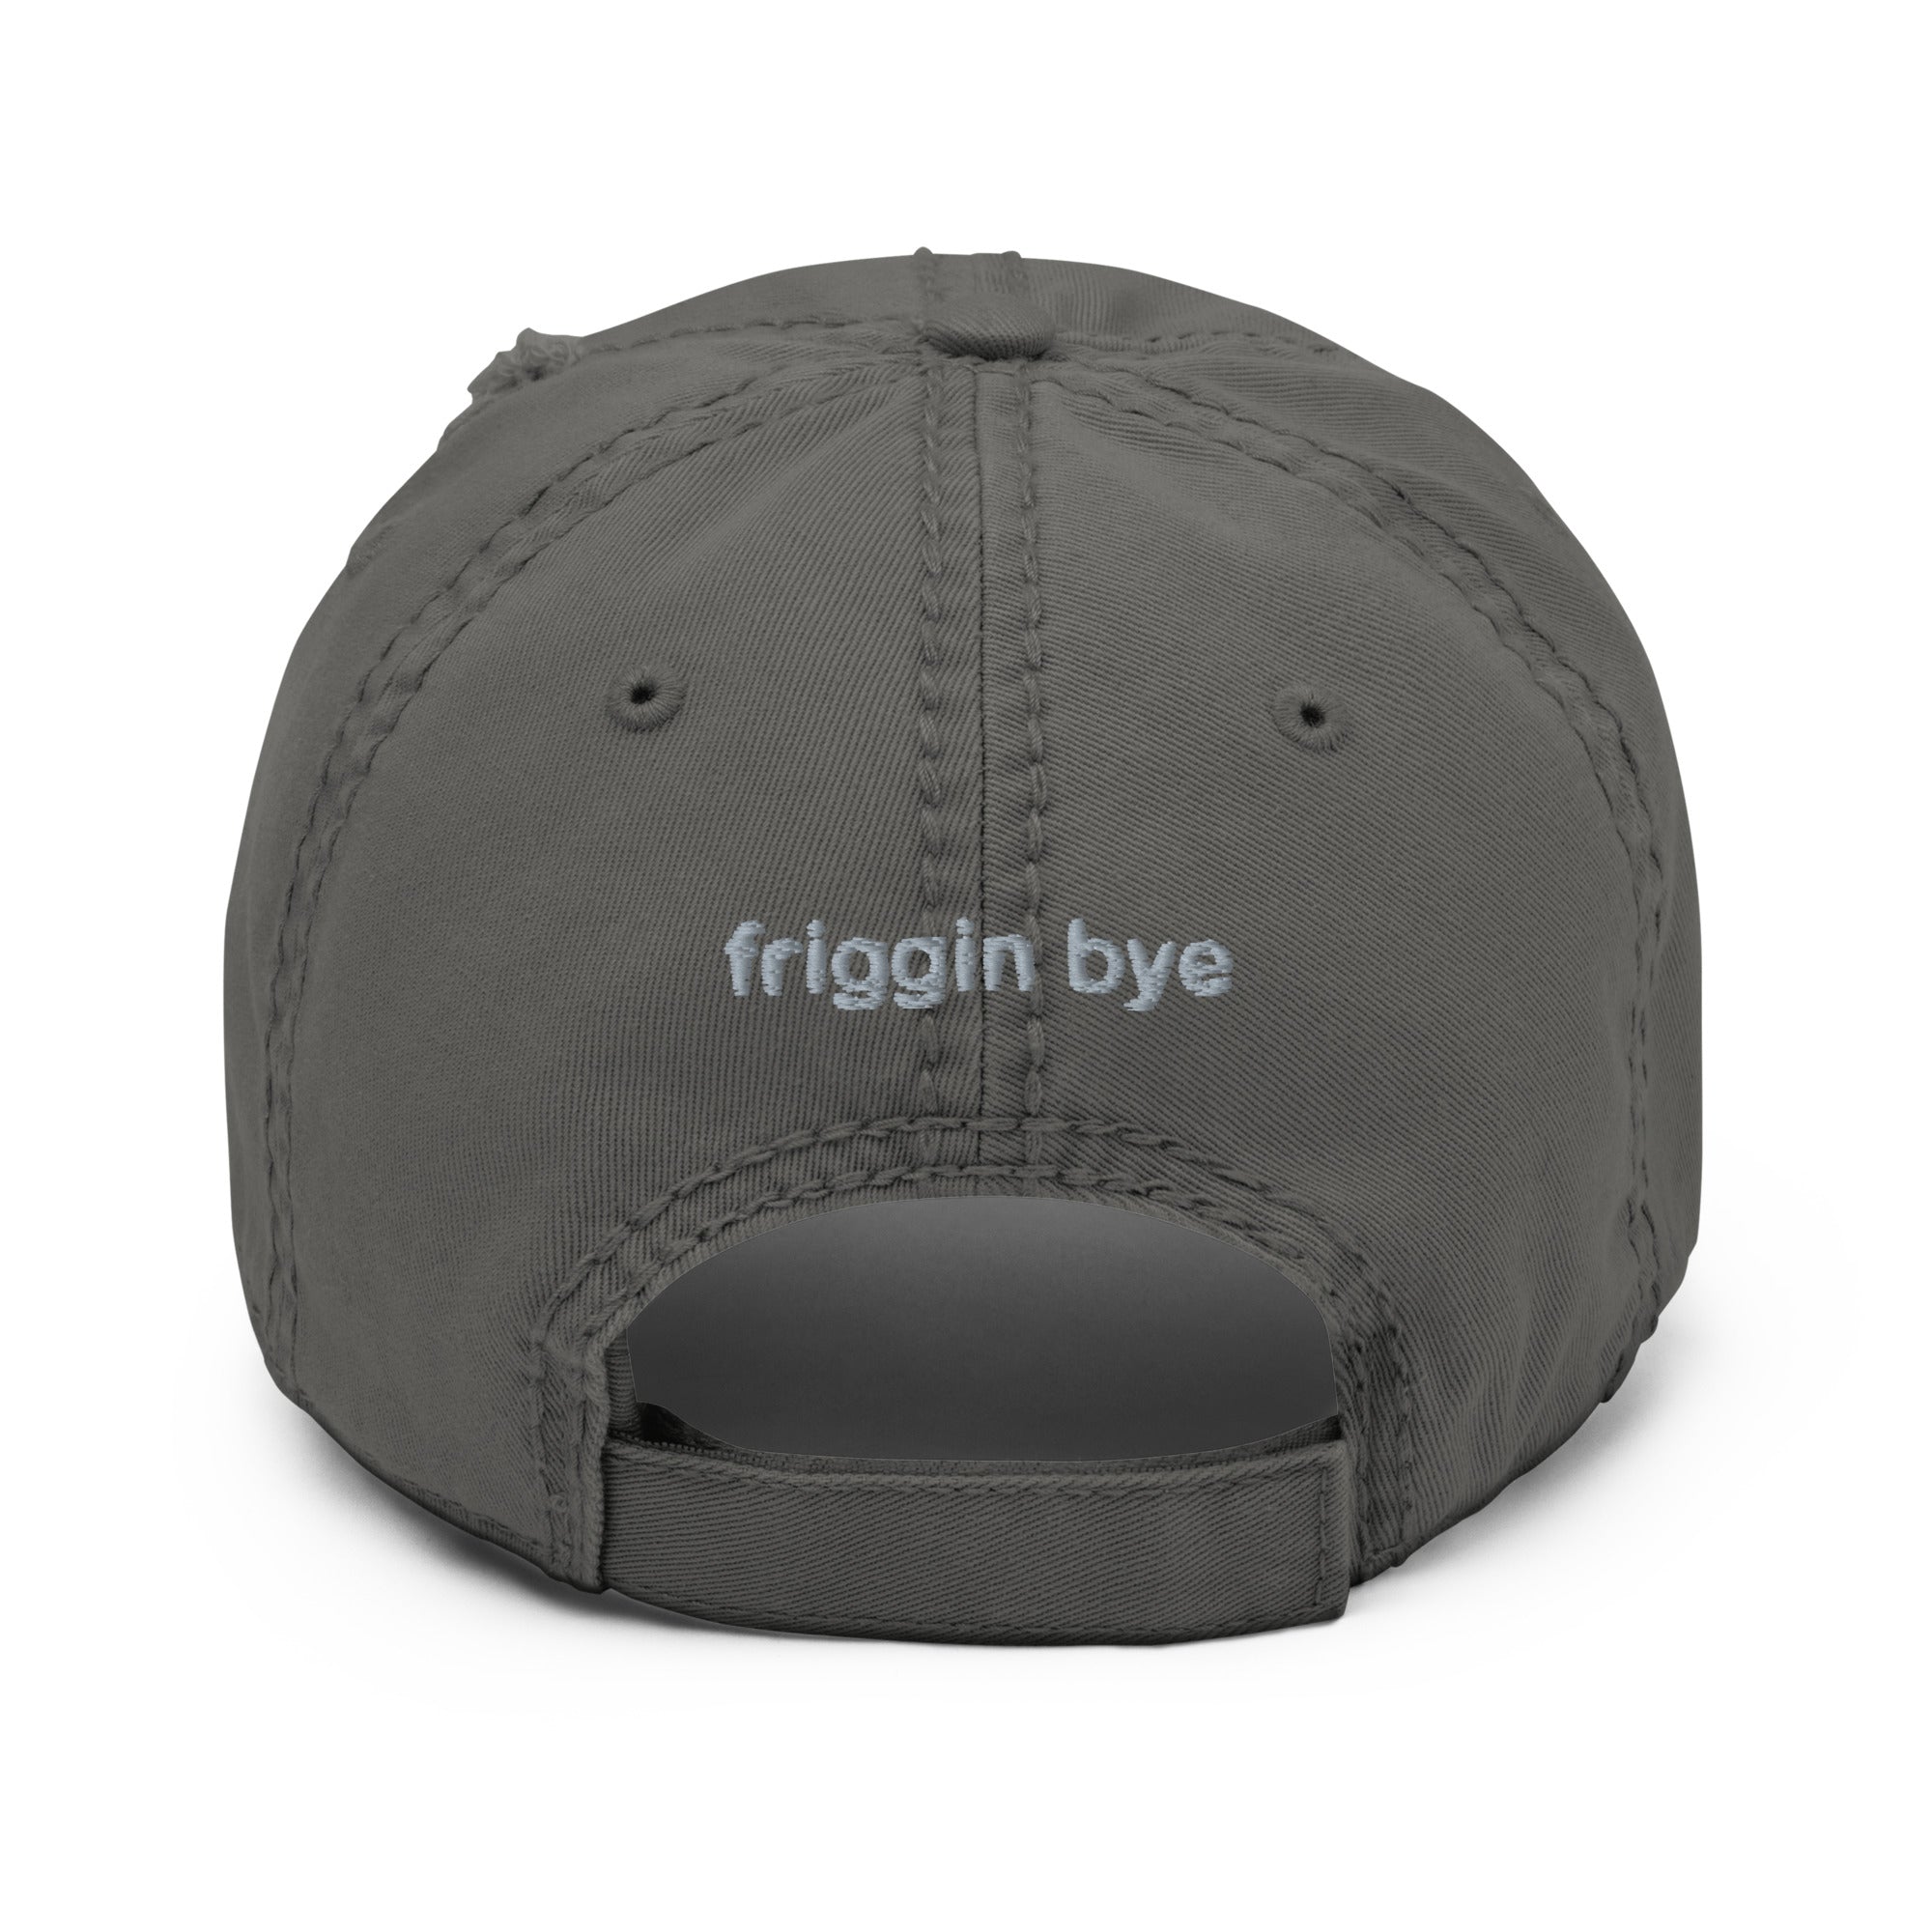 "Friggin Hi, Friggin Bye" Grey Embroidered Distressed Dad Adult Hat